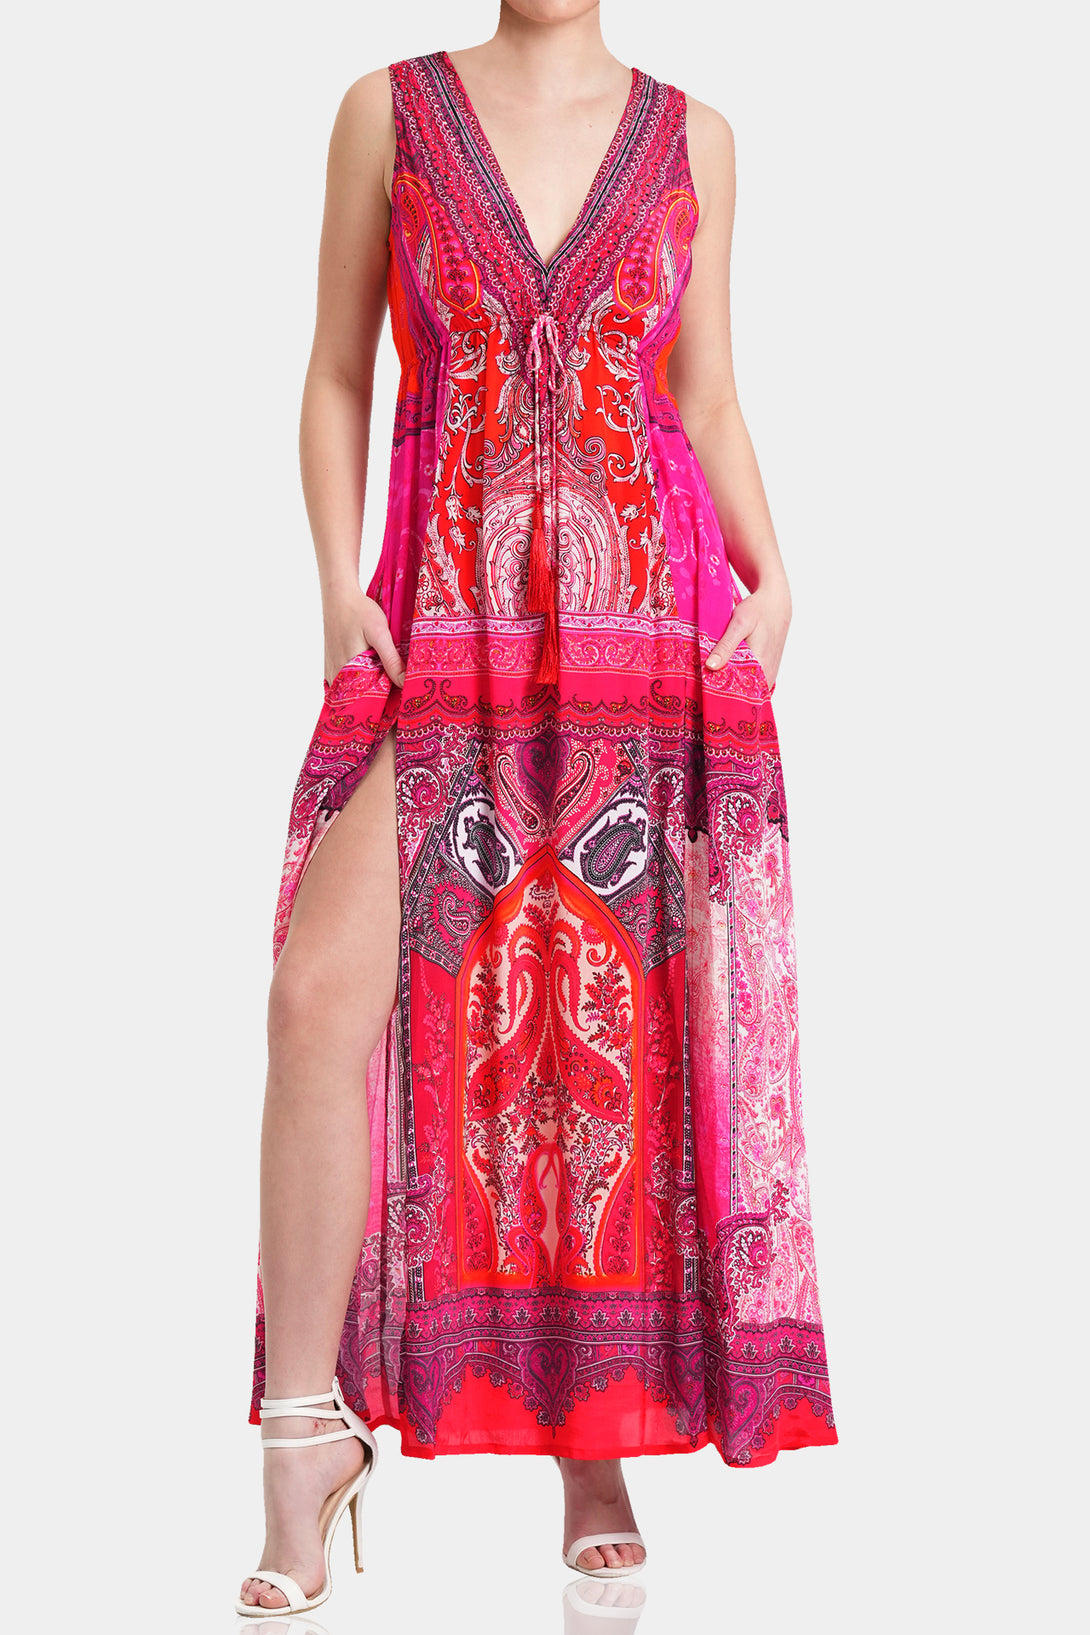  hot pink dress maxi, plunging v neck formal dress, Shahida Parides,